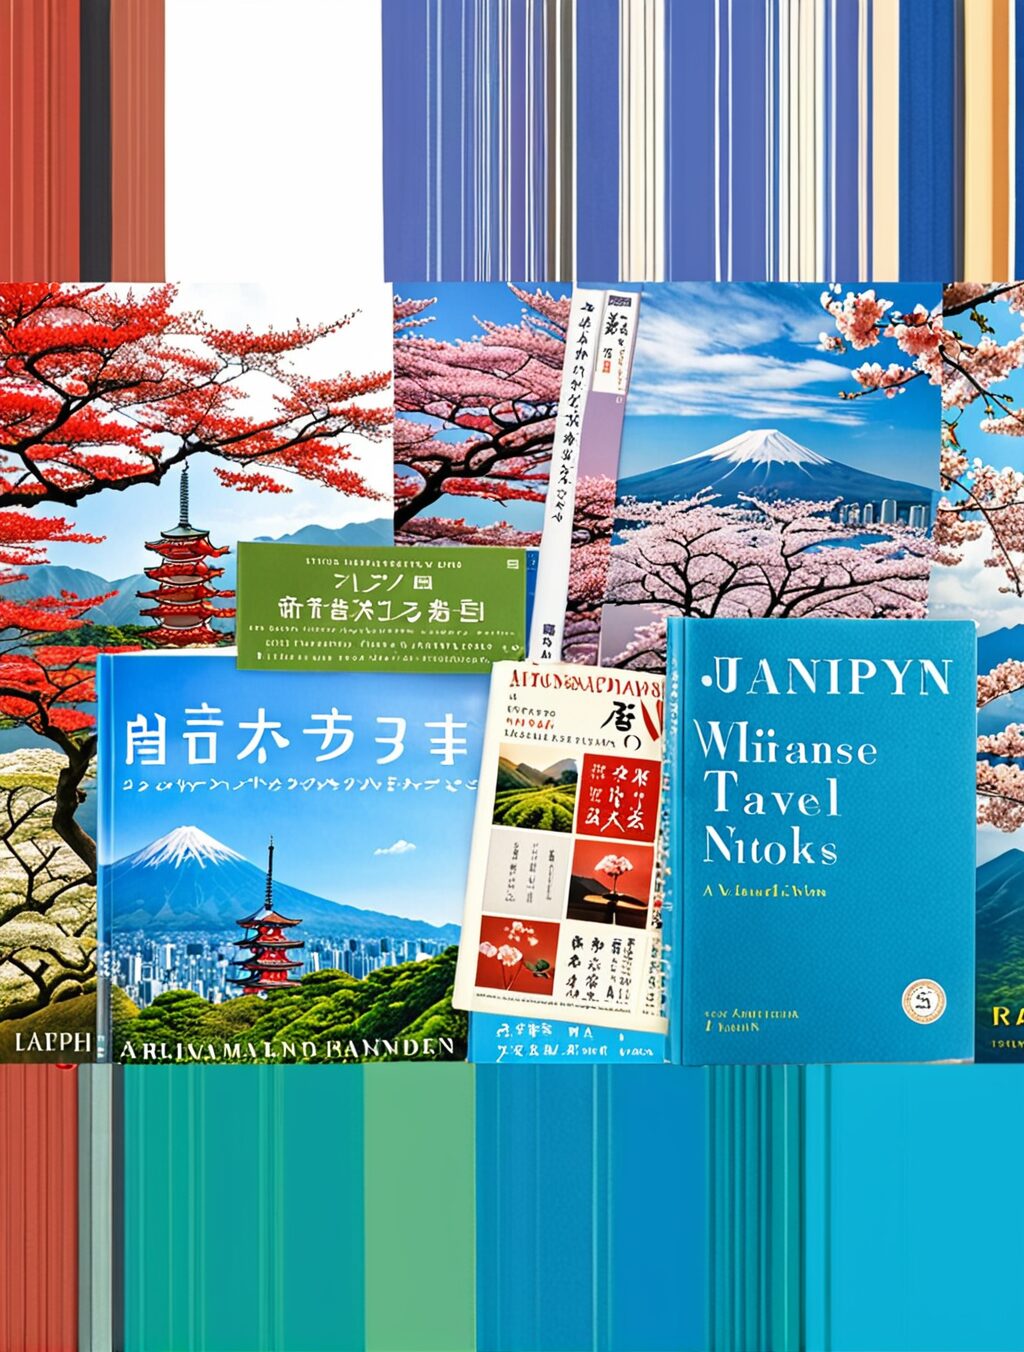 best japan travel books